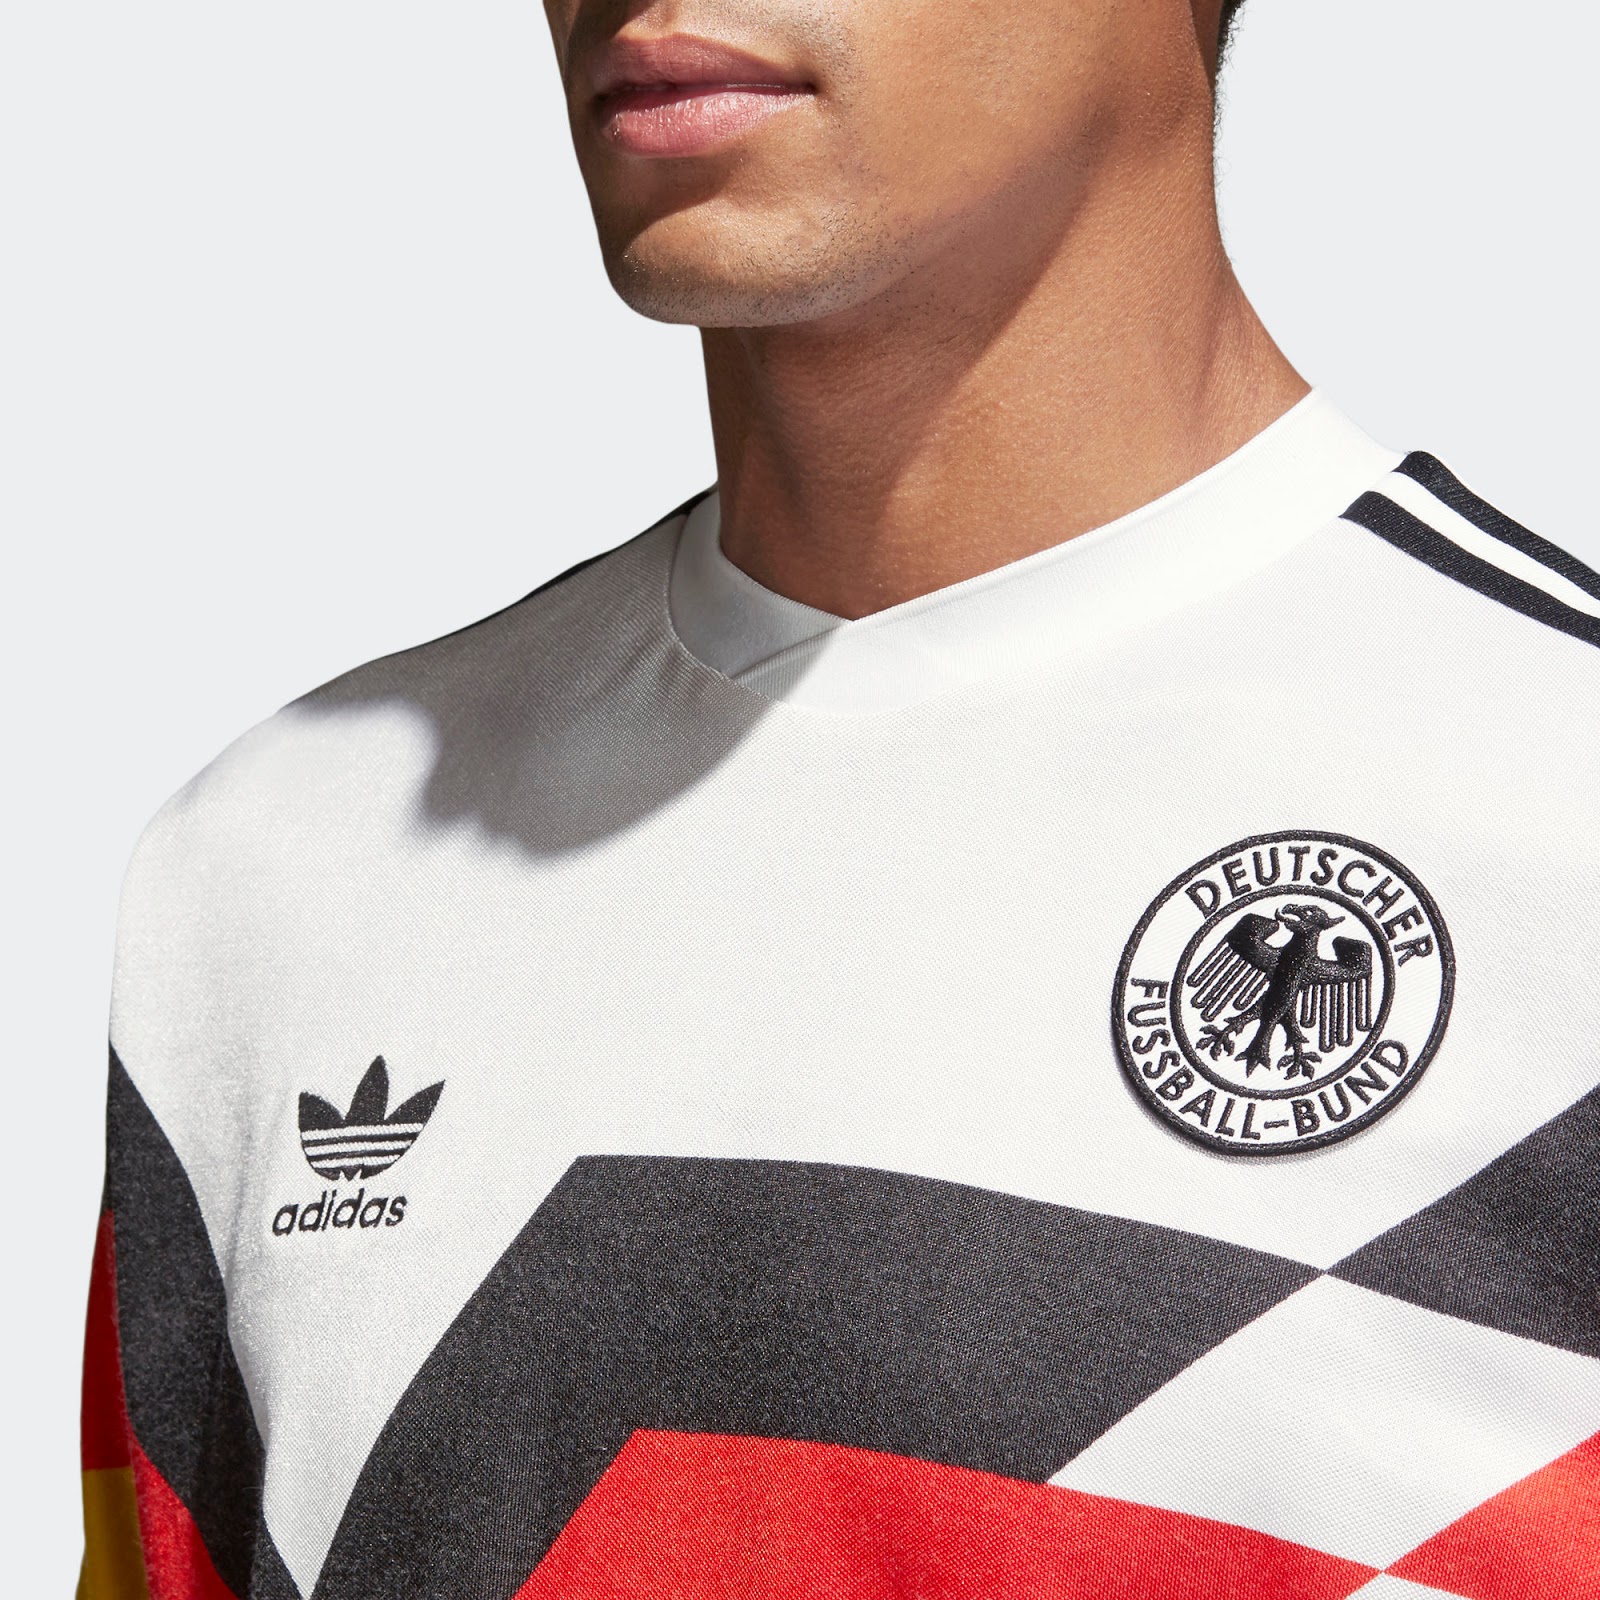 Adidas Originals Germany Retro Jersey Released - Footy Headlines